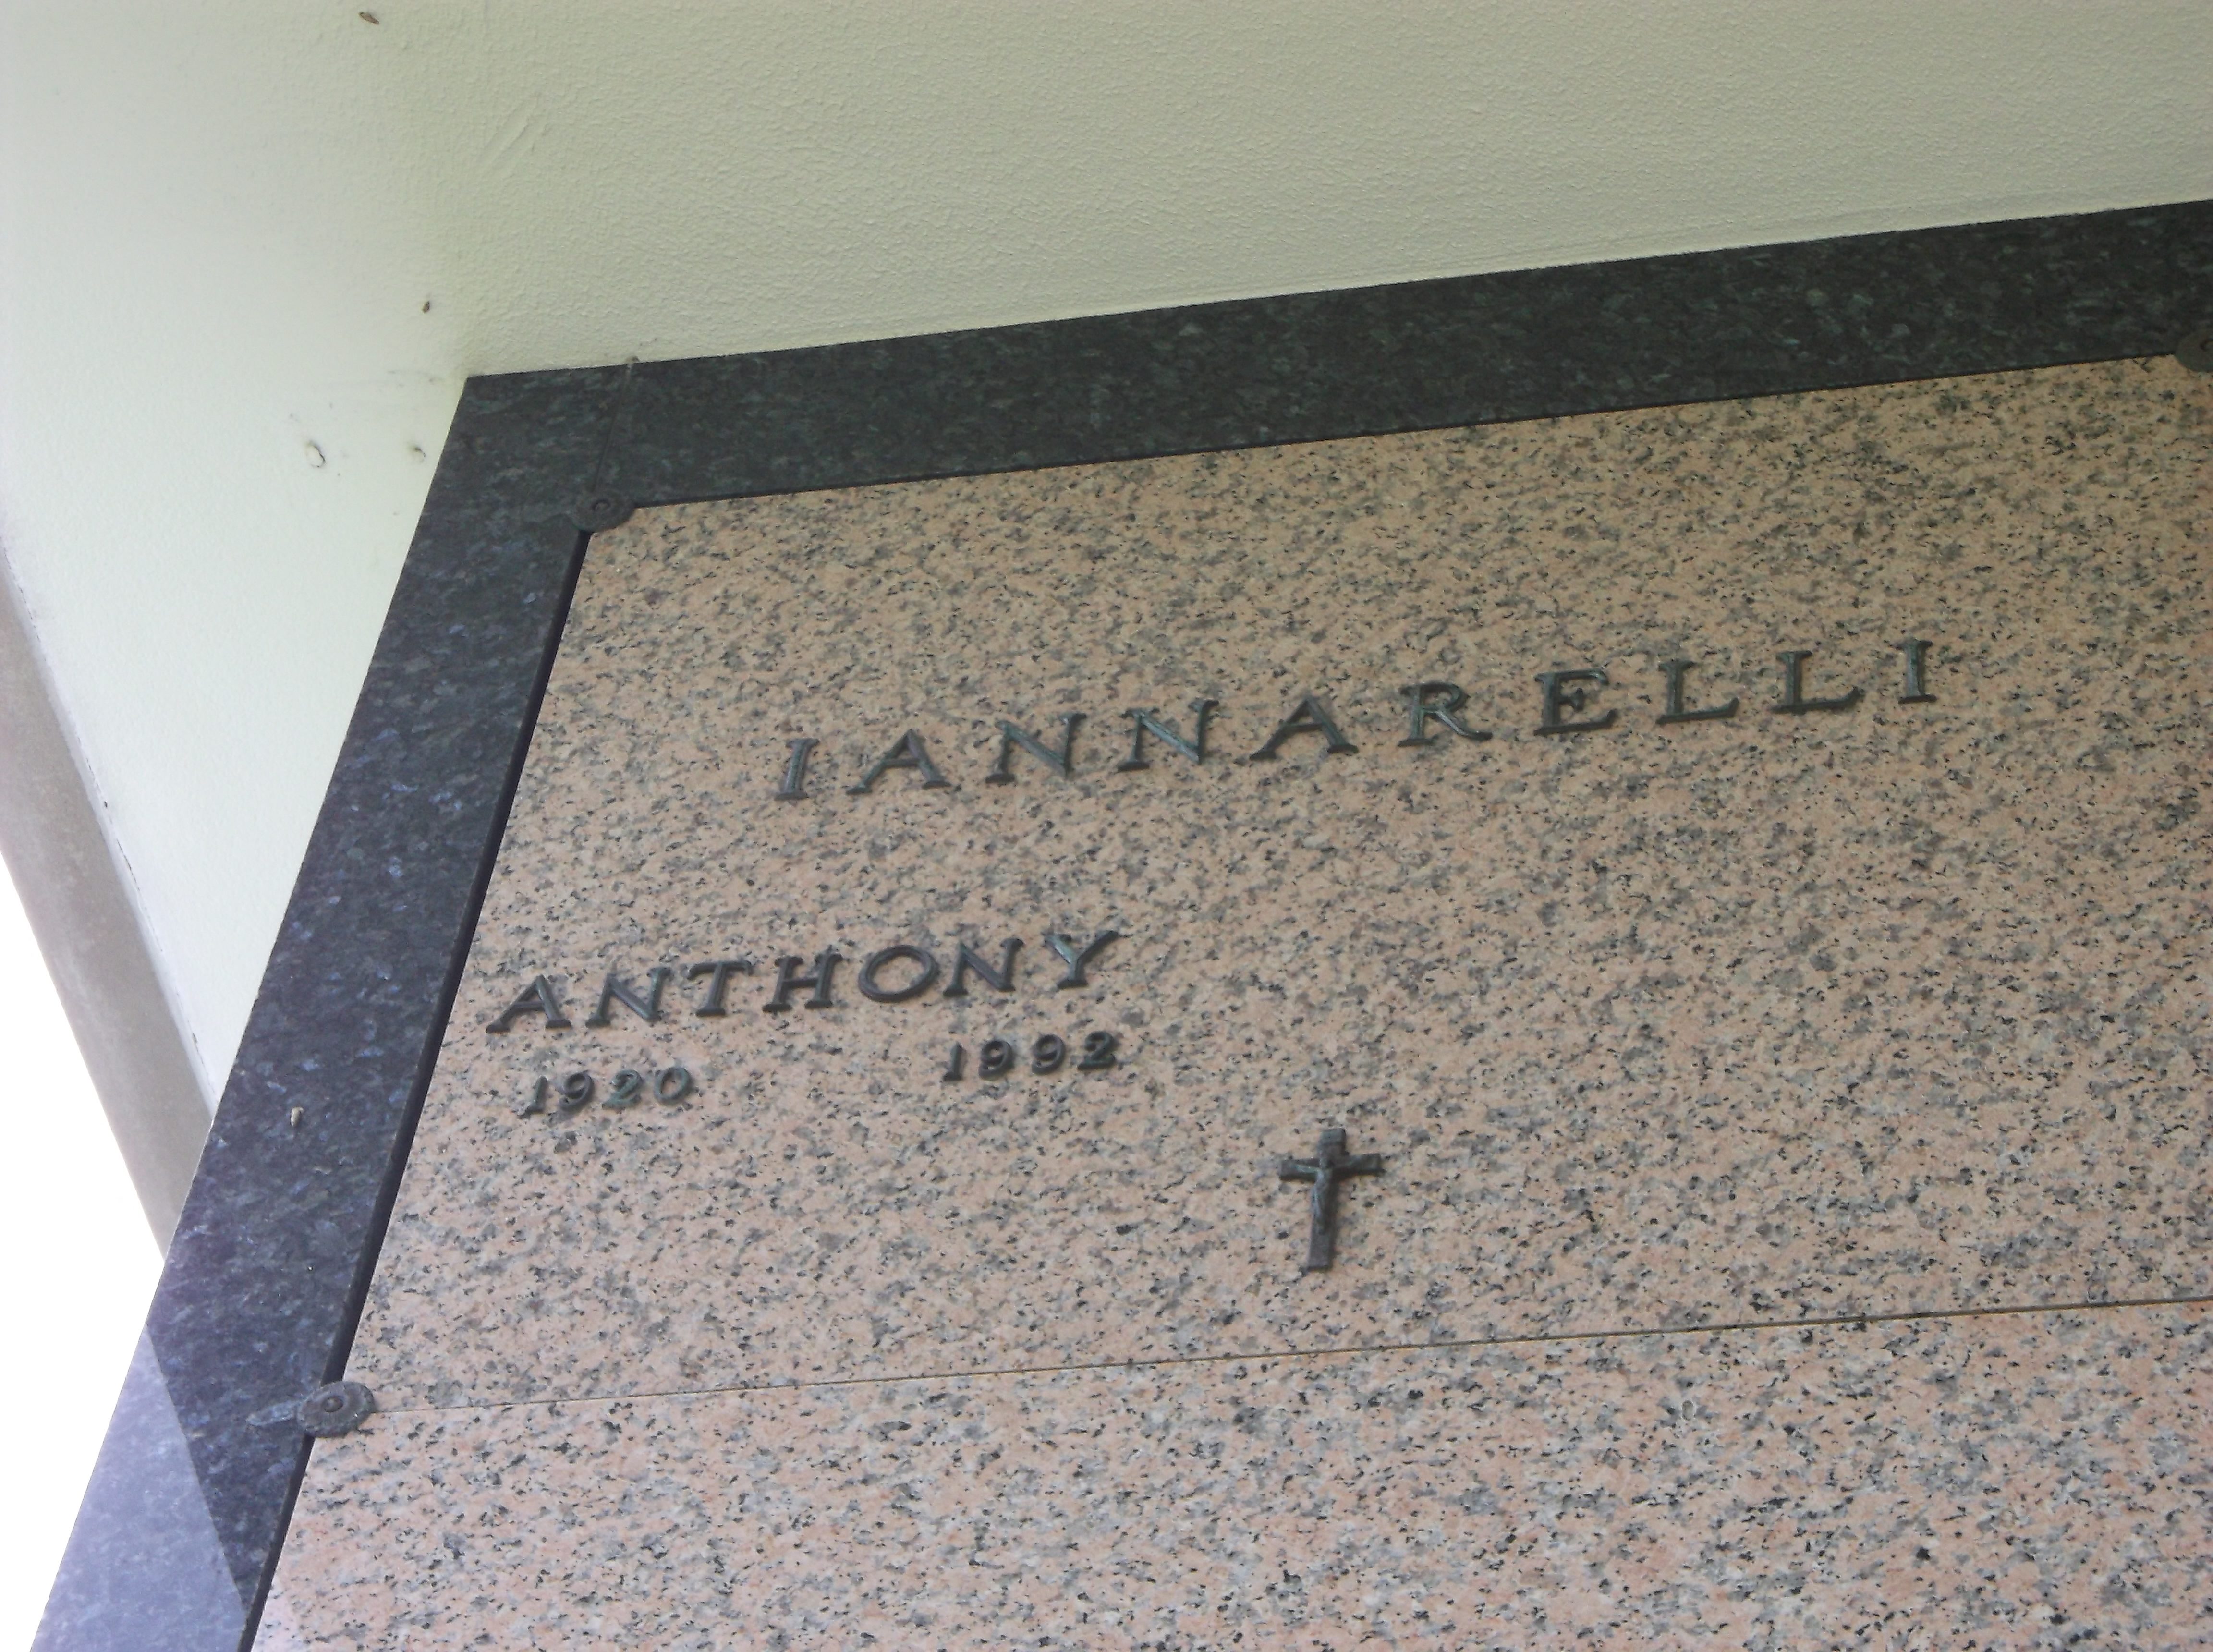 Anthony Iannarelli